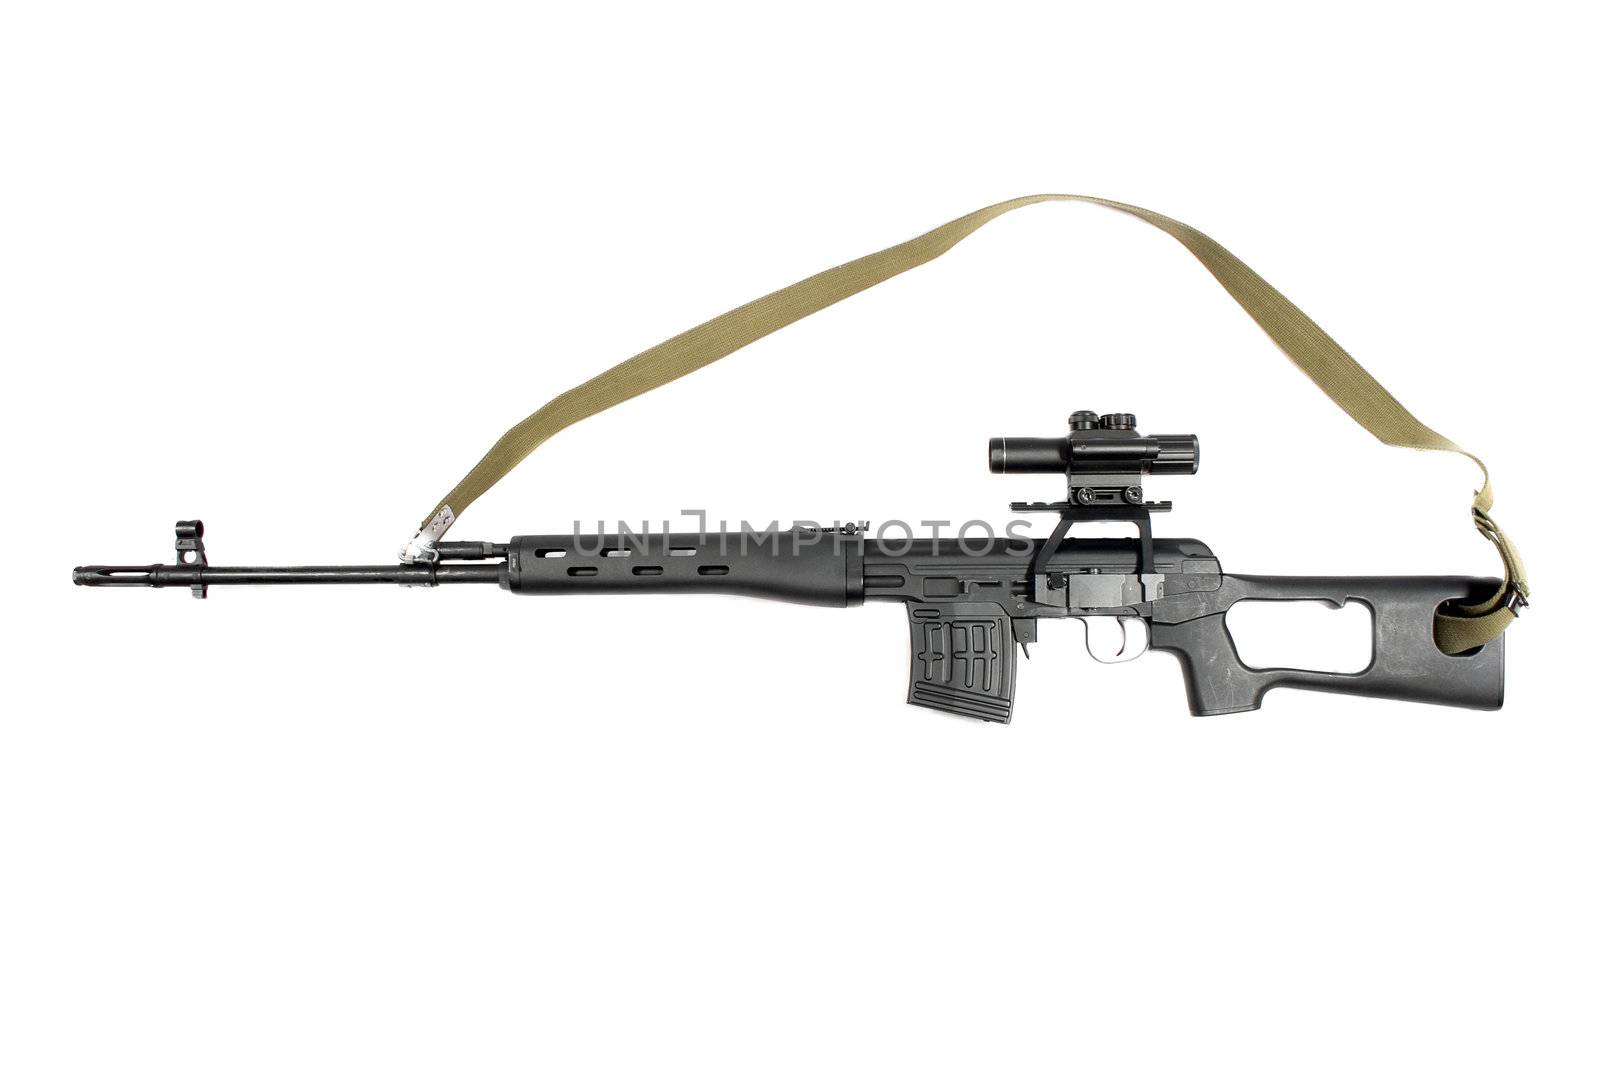 Sniper rifle SVD by acidgrey